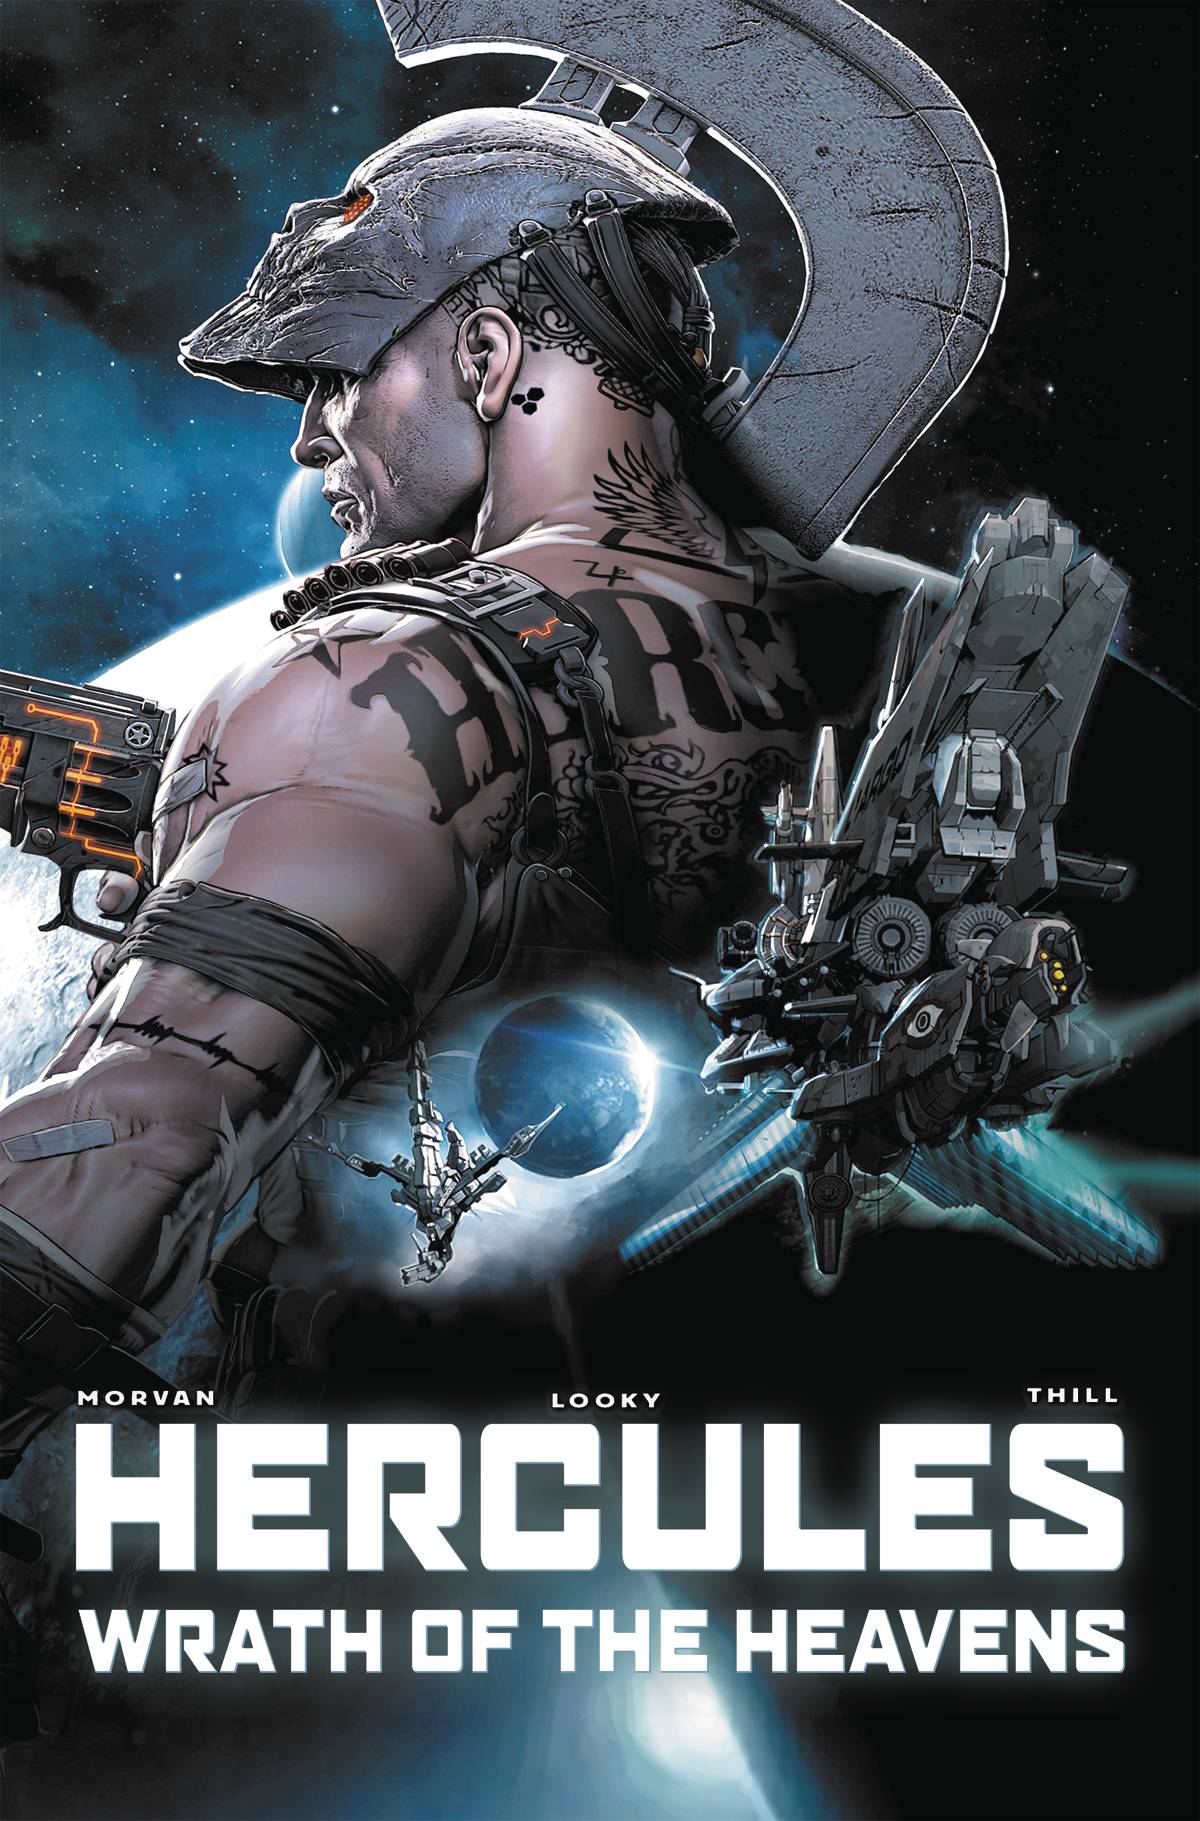 HERCULES: WRATH OF THE HEAVENS#1